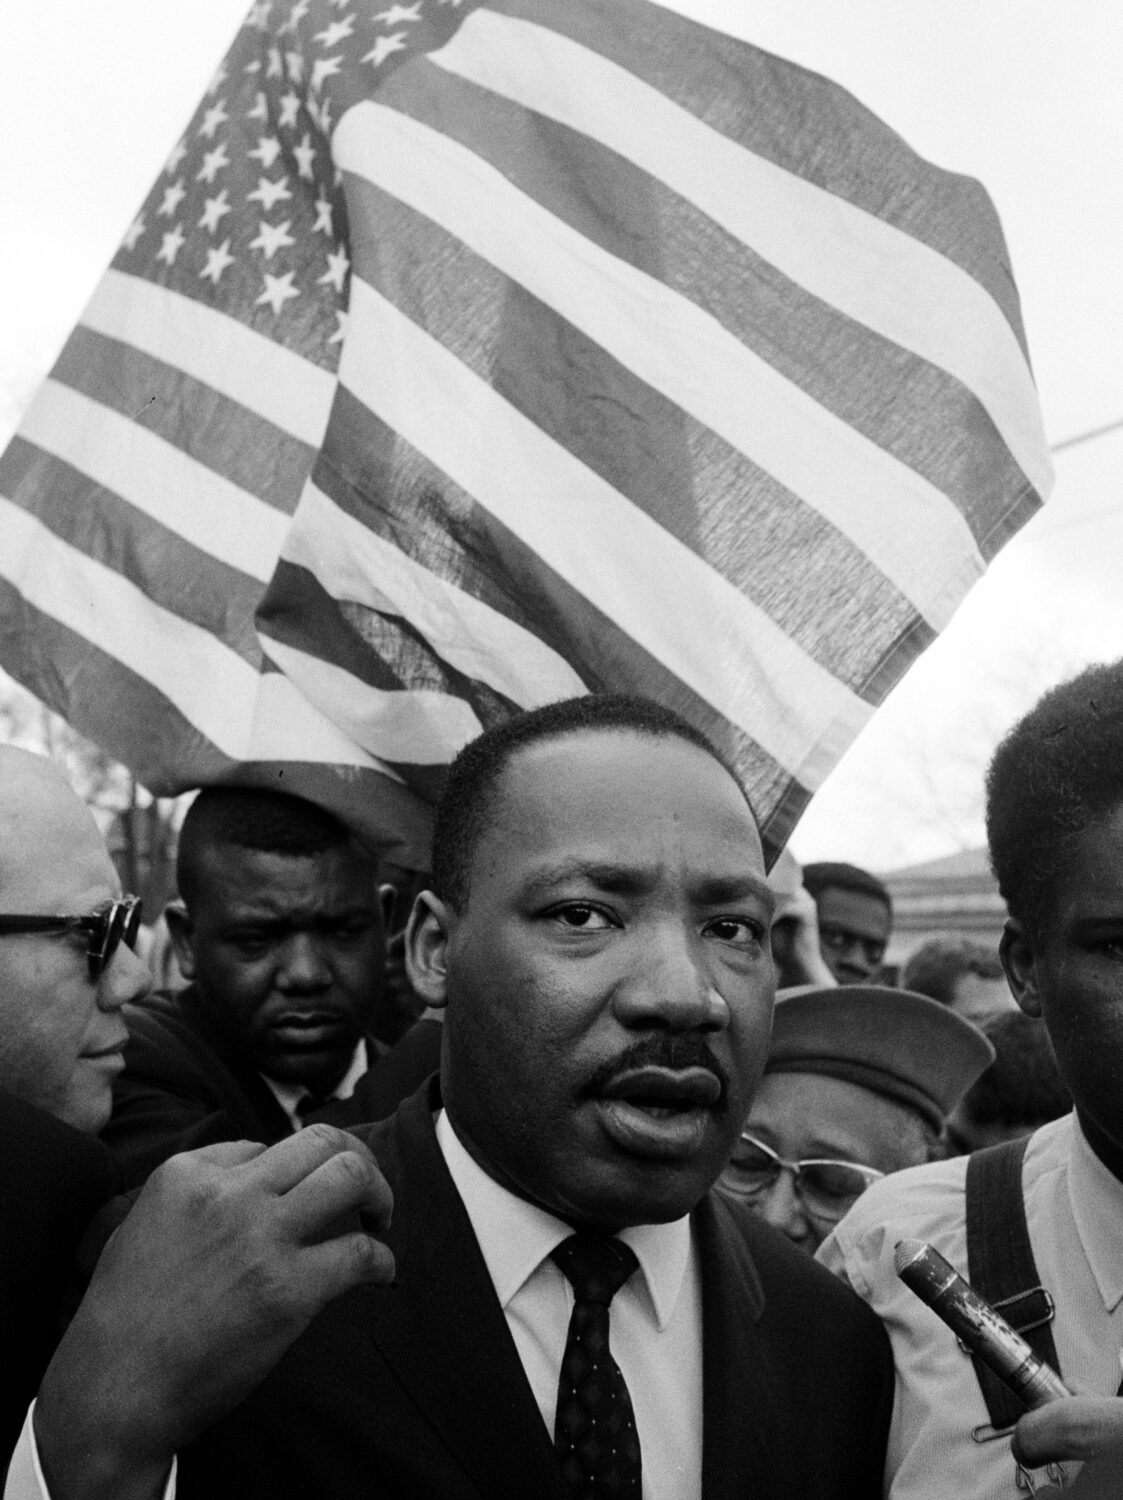 Steve Schapiro: Martin Luther King Jr. with Flag